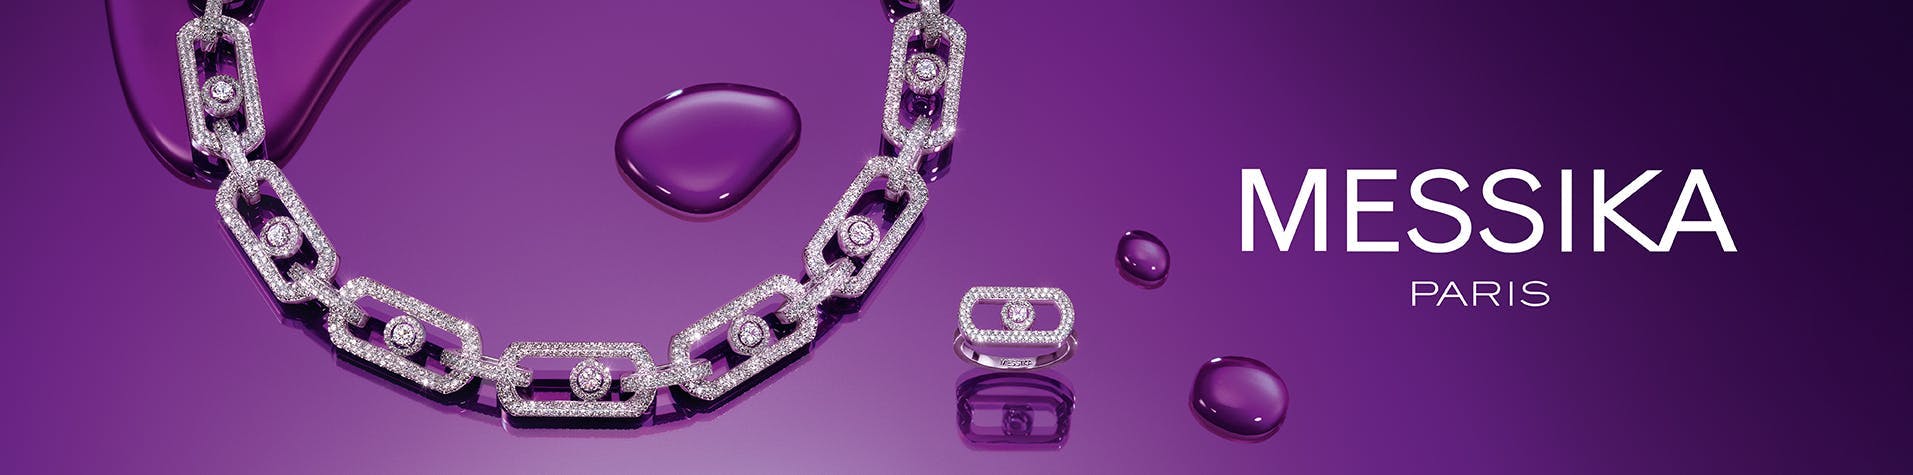 Designer Messika luxury jewelry at Eiseman Jewels luxury jewelry store Dallas, Texas